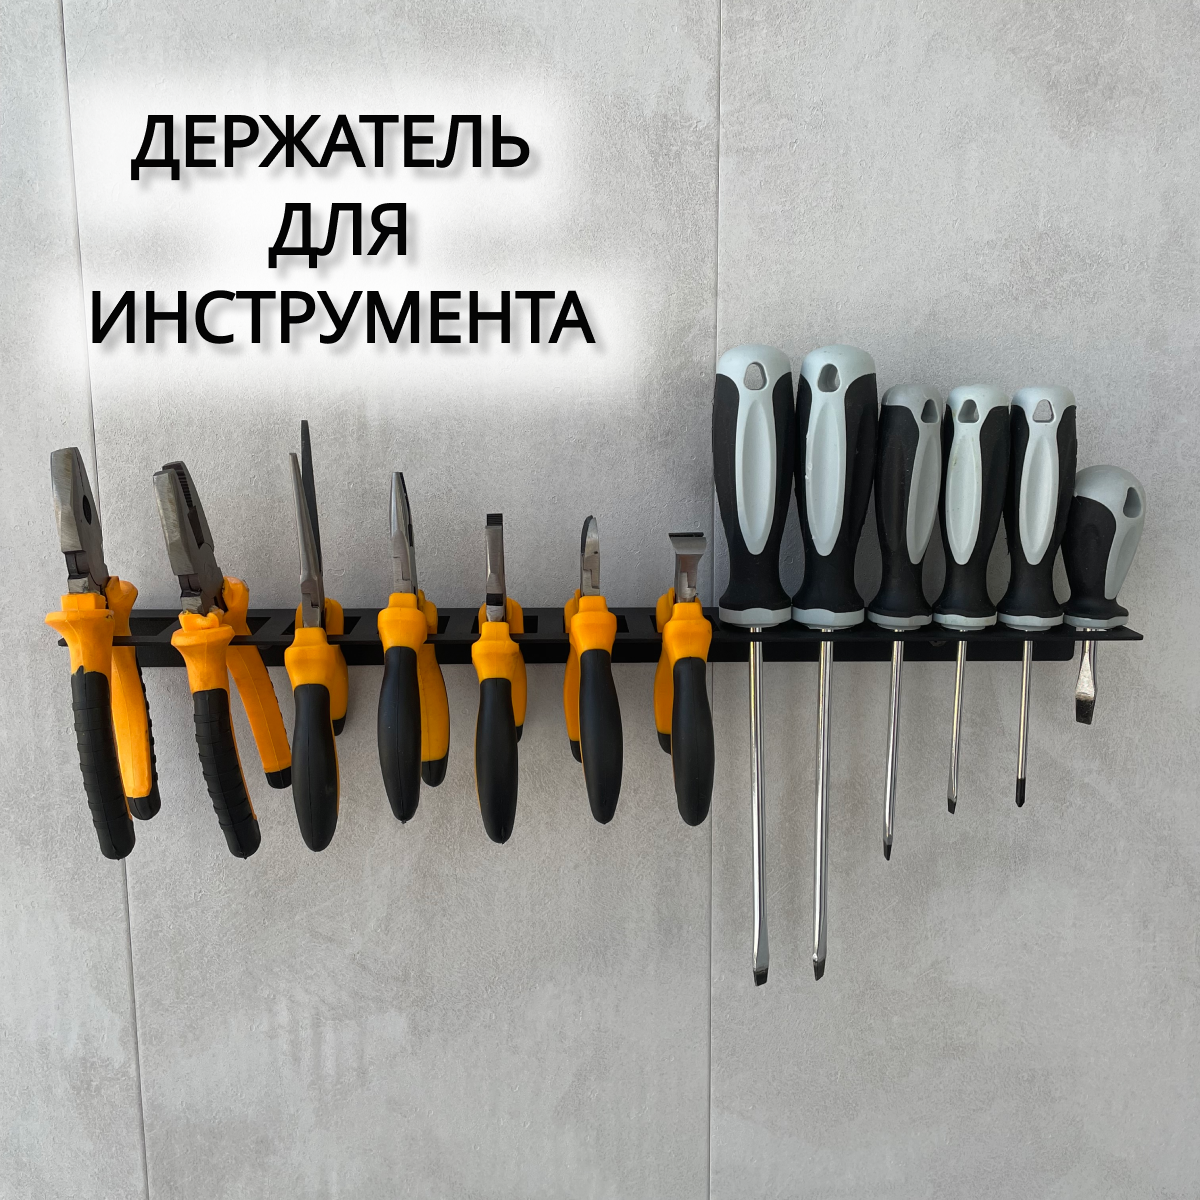 Органайзер для инструмента, Lilysteel SL-DP-black, металлический, черный, 40 см органайзер для кухонных инструментов eva solo legio